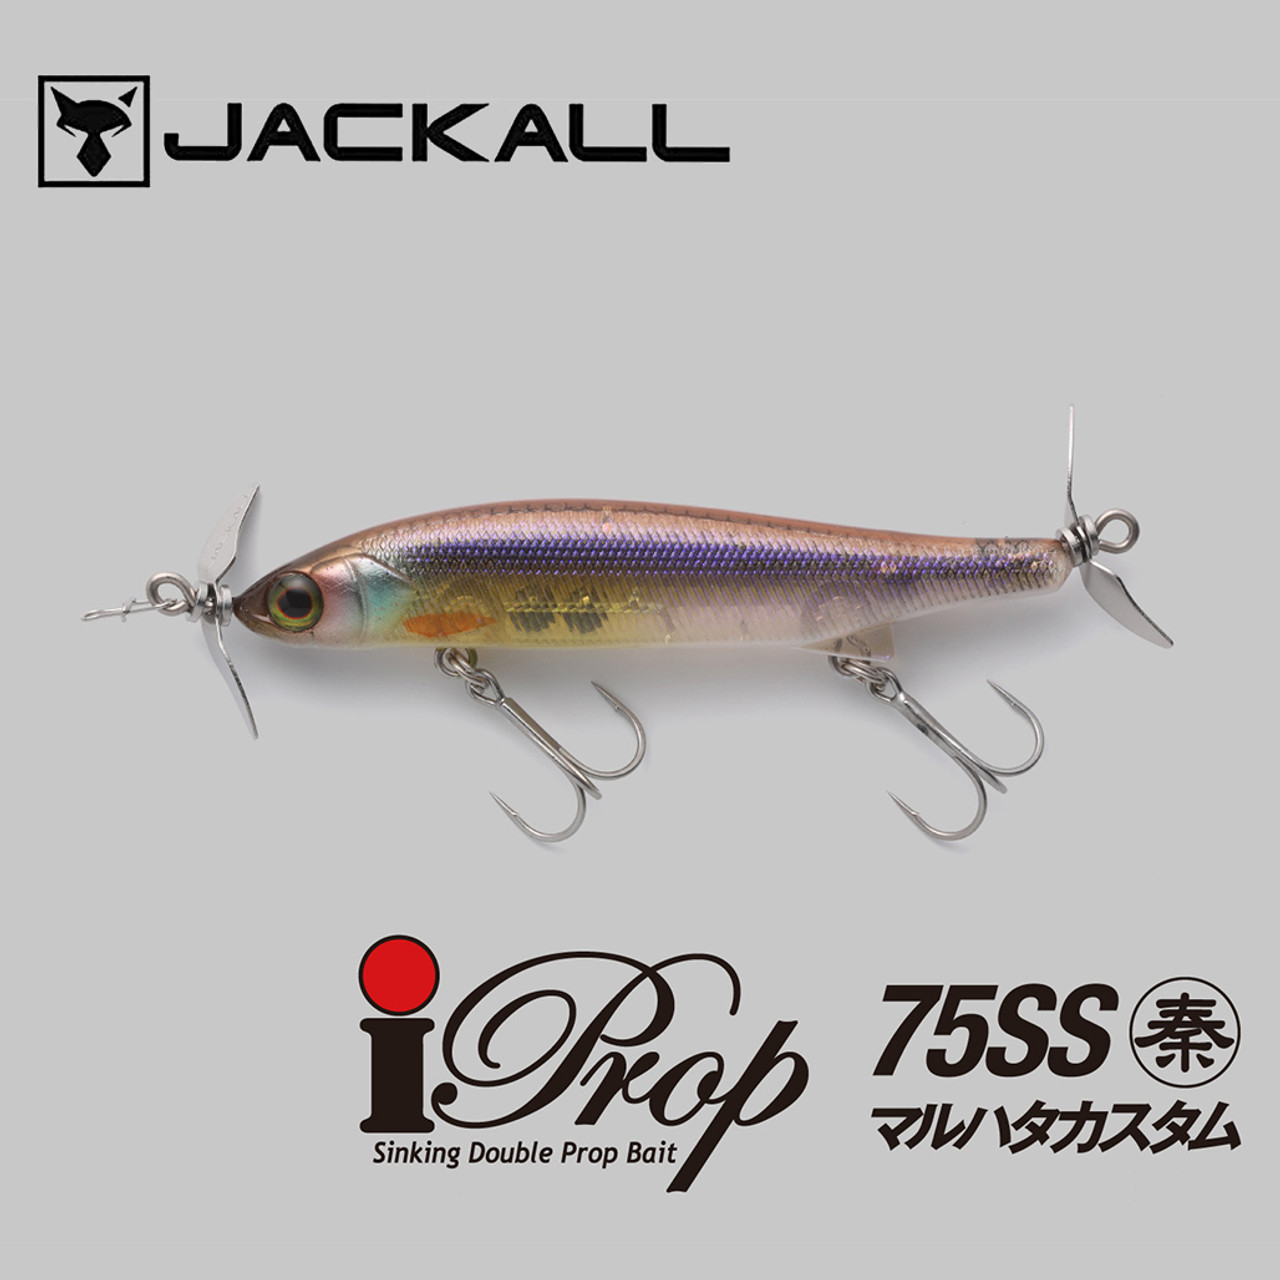 Jackall I-PROP 75SS Maruhata Custom Spybaits NEW